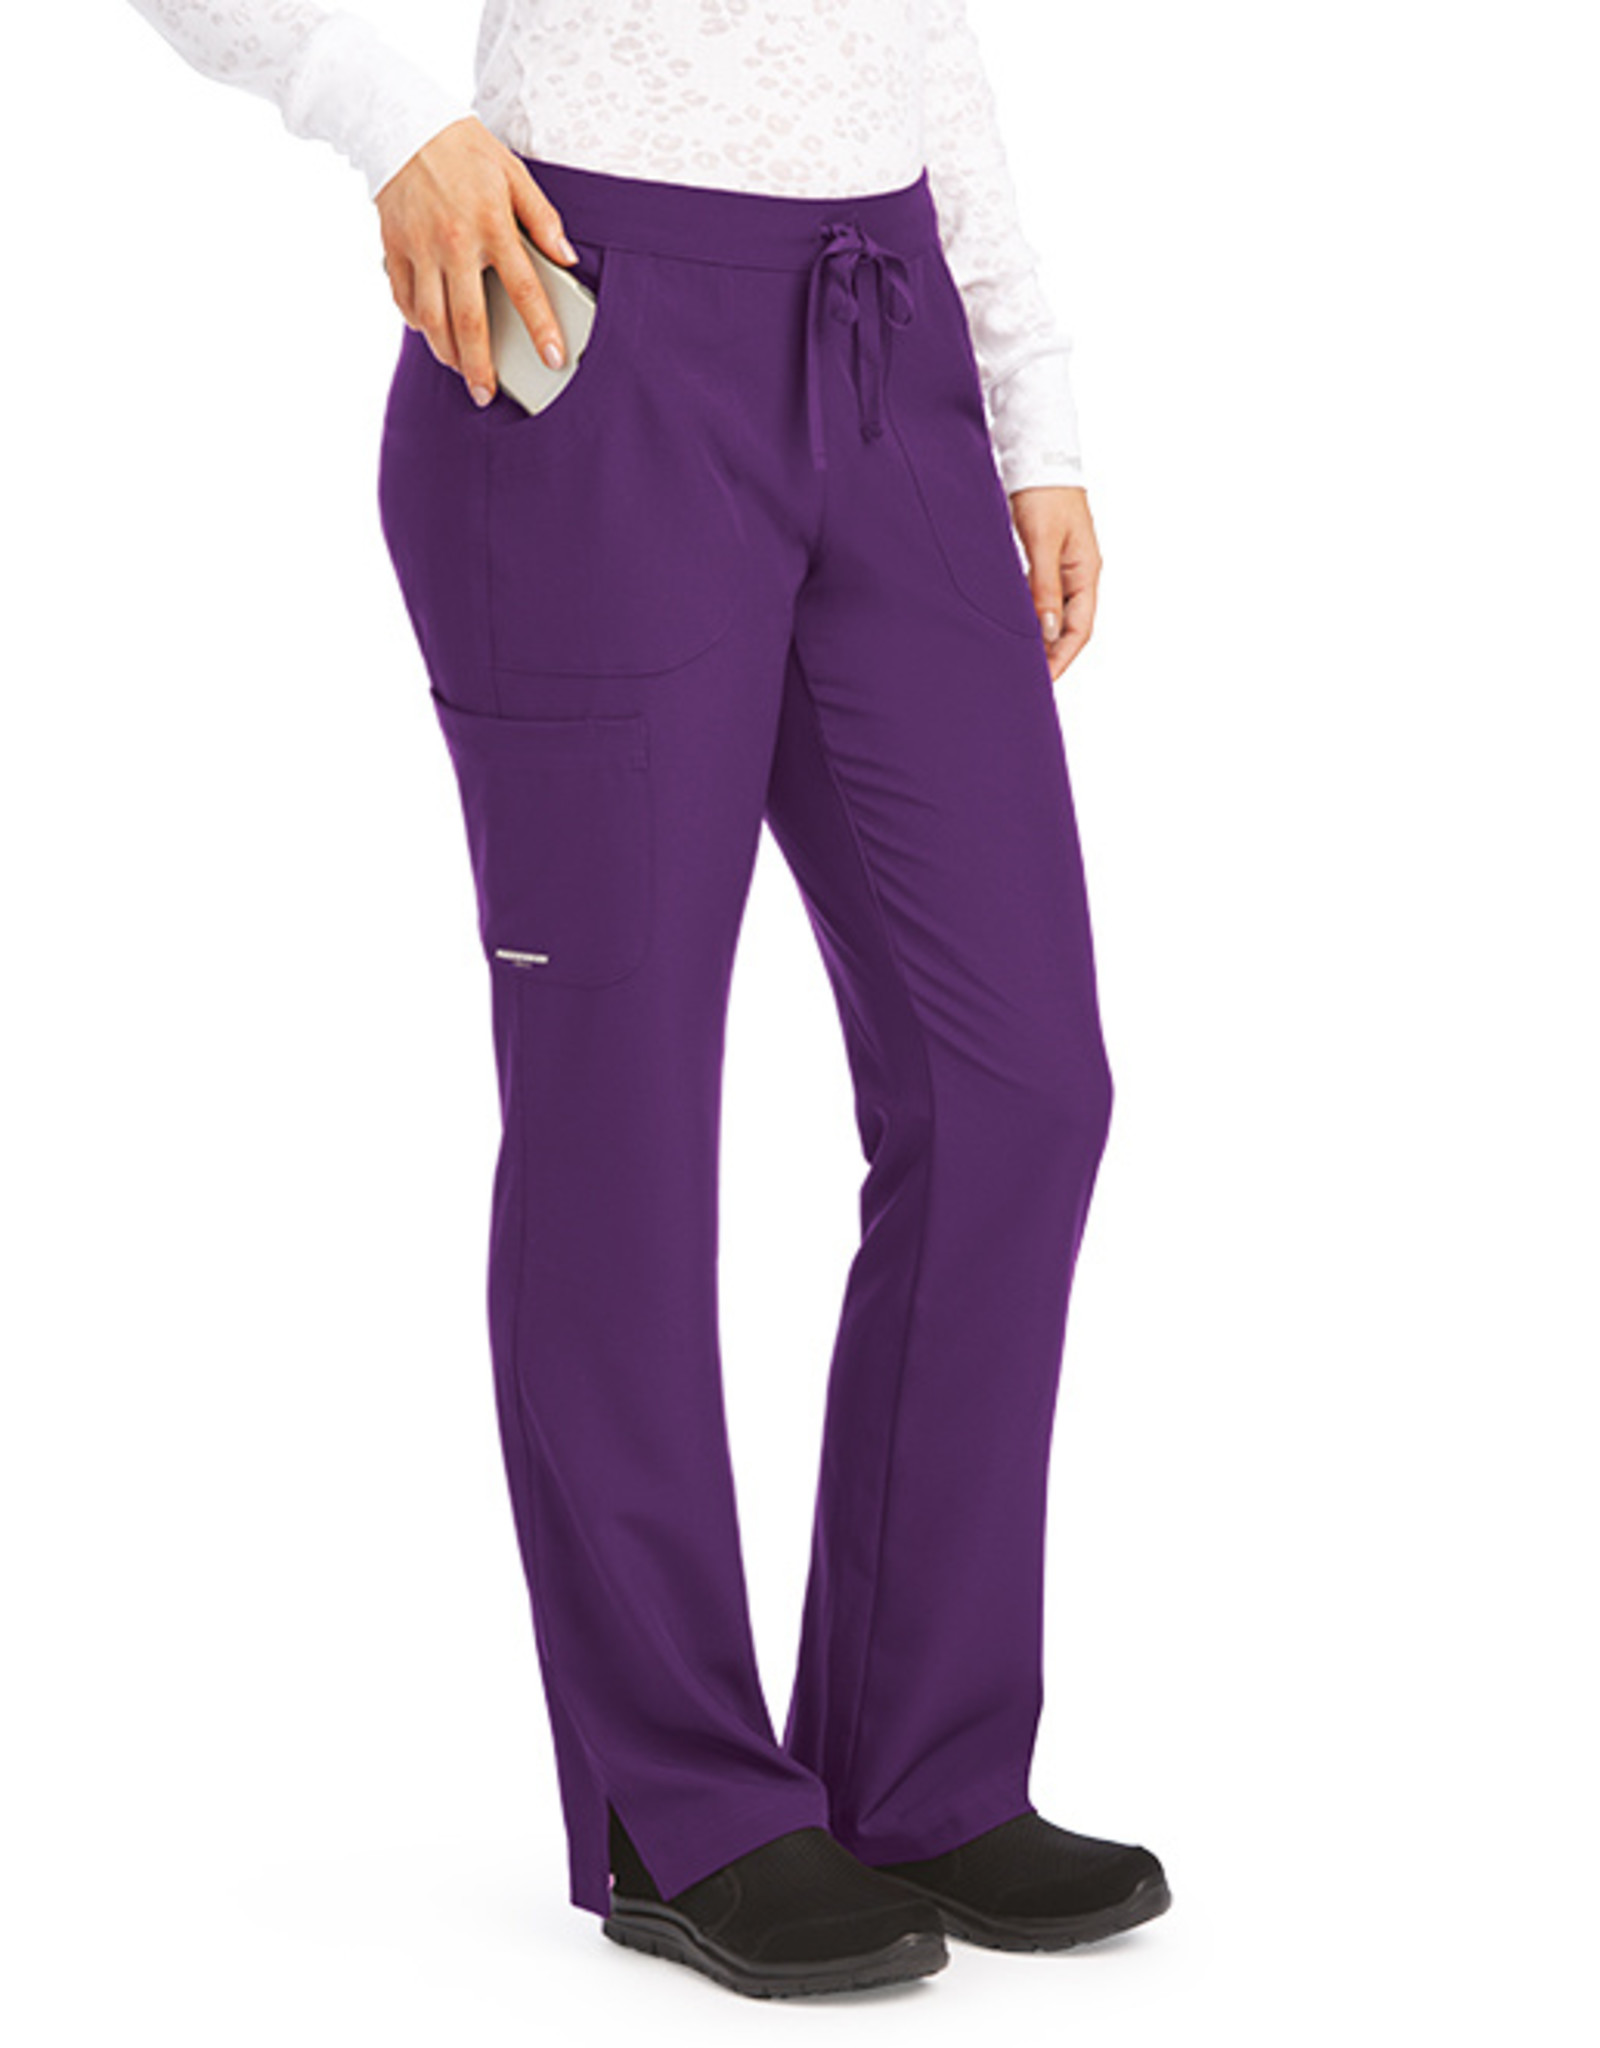 Skechers Women's "Reliance" 3-Pocket Pant (Plus Size)